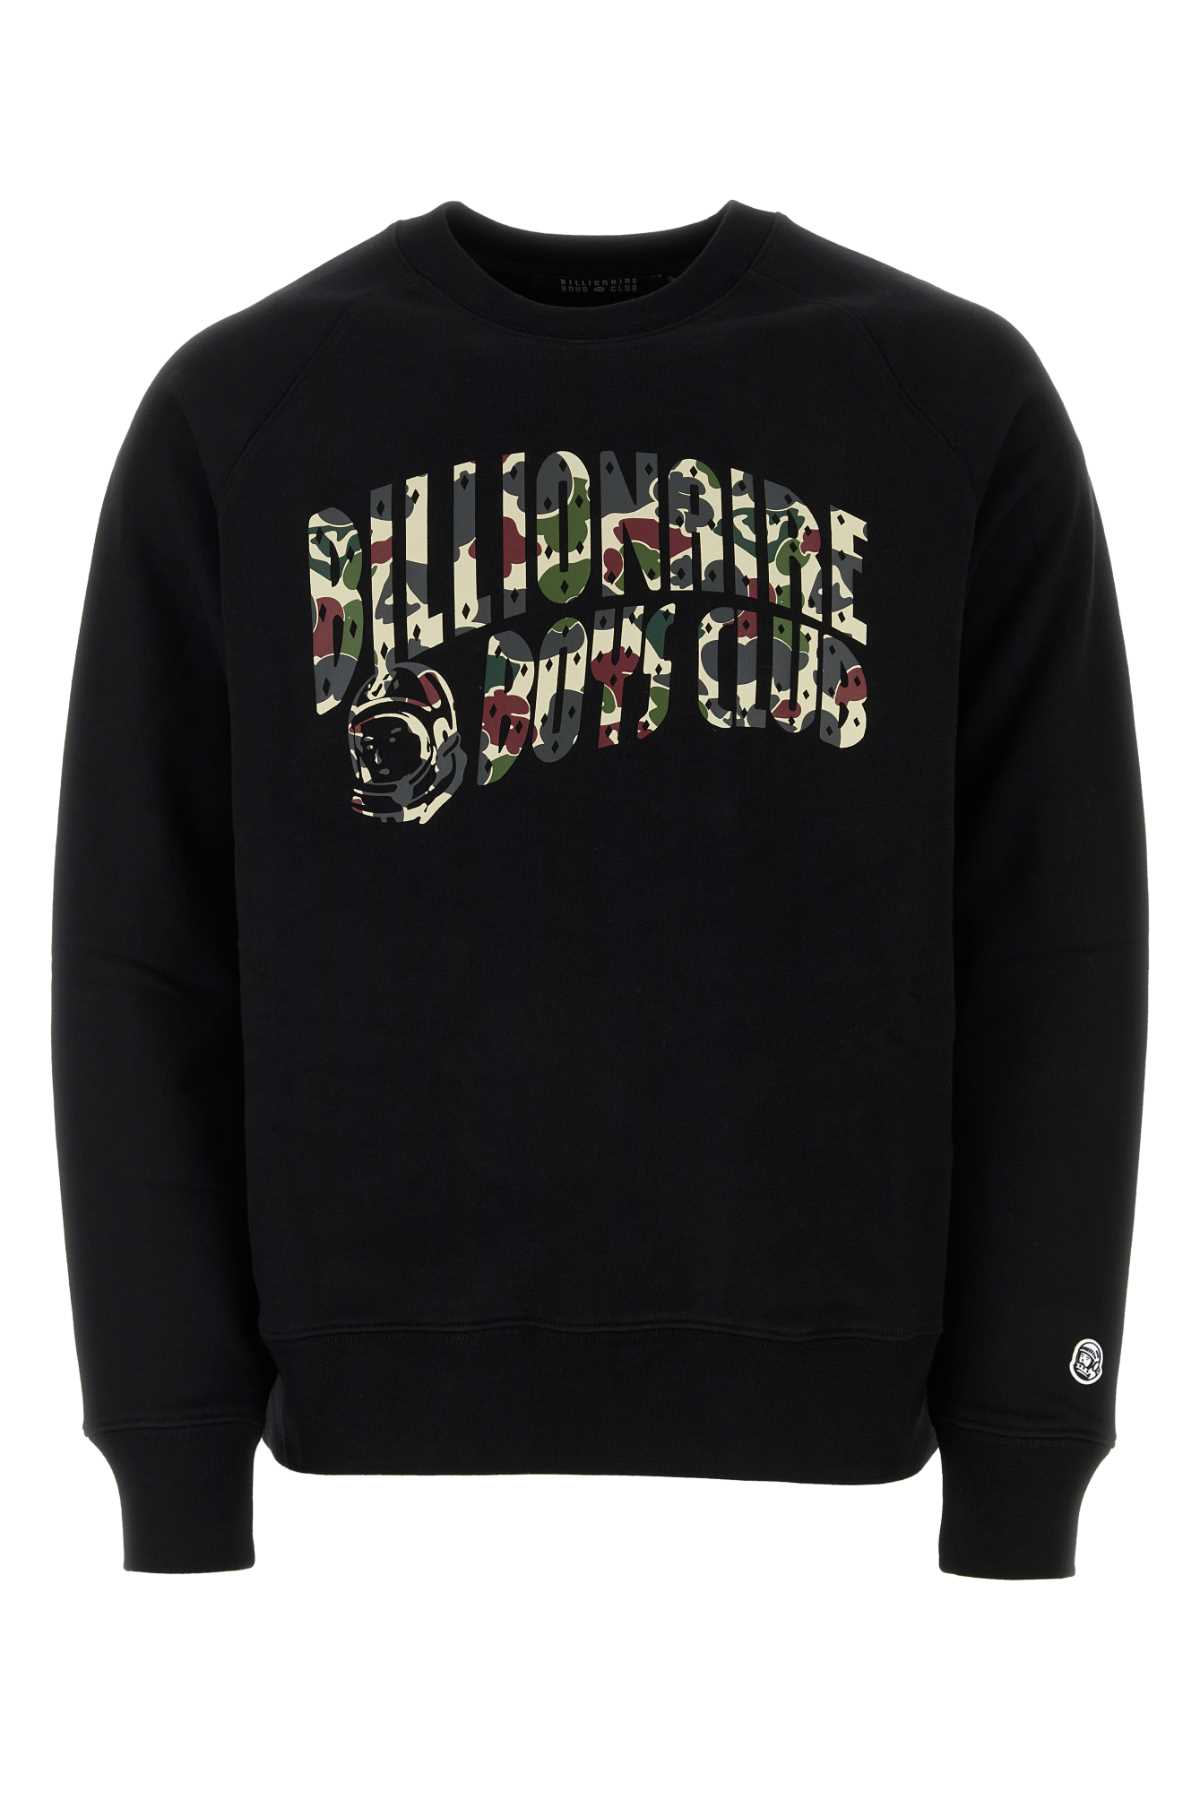 Billionaire Boys Club Black Cotton Sweatshirt